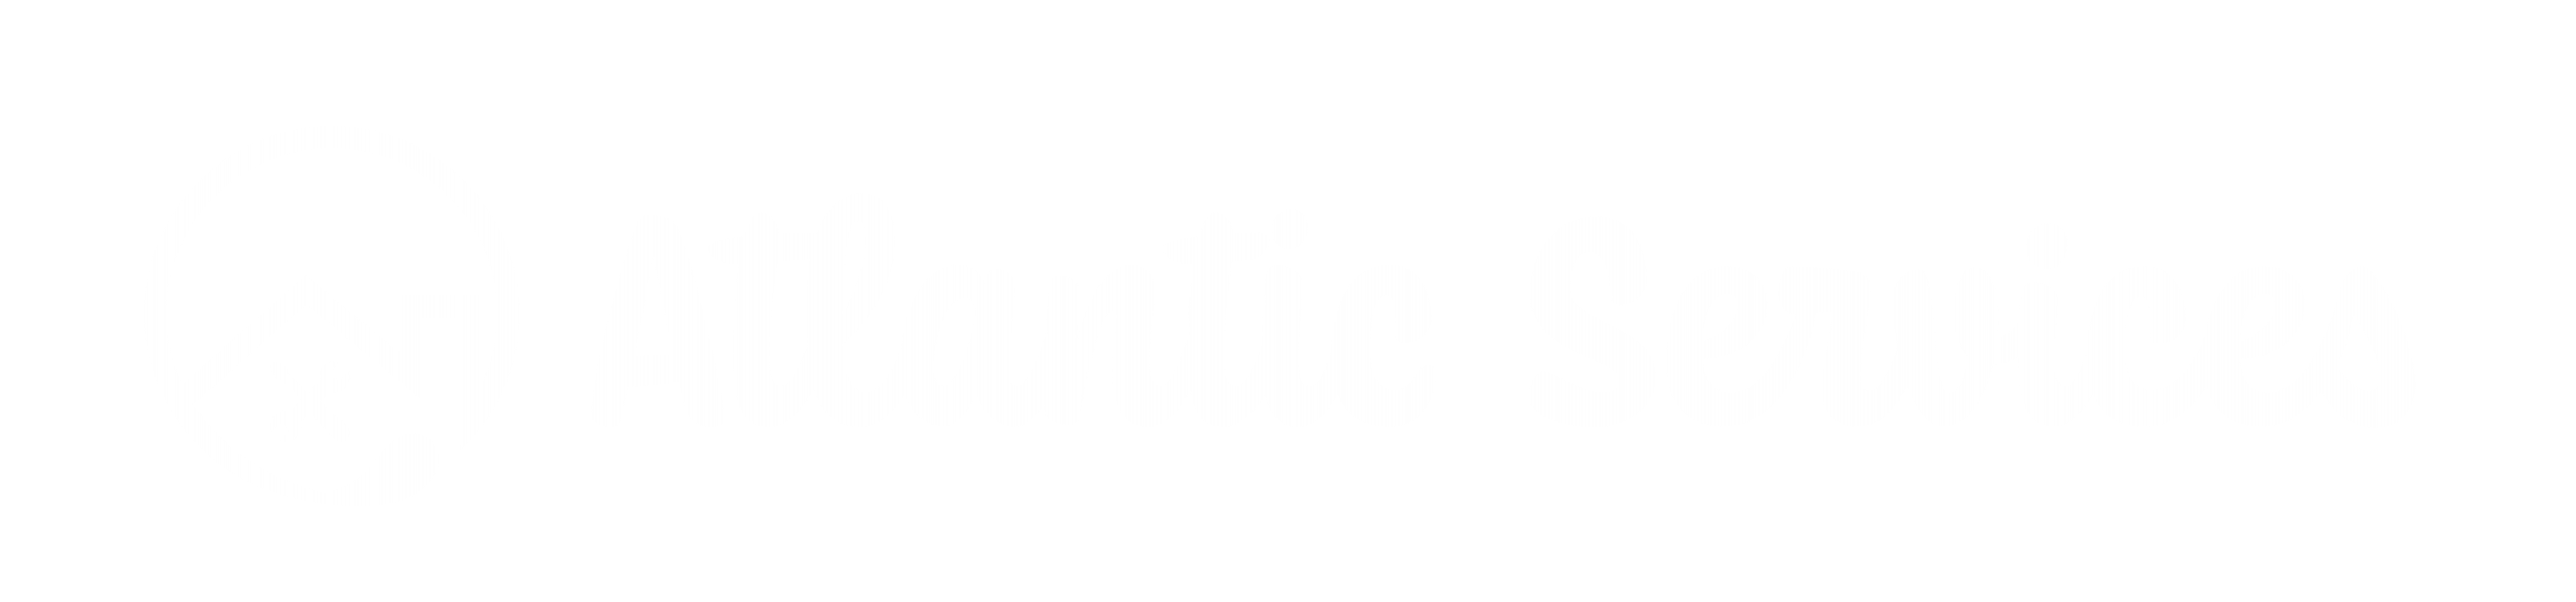 Atlantic Services - White